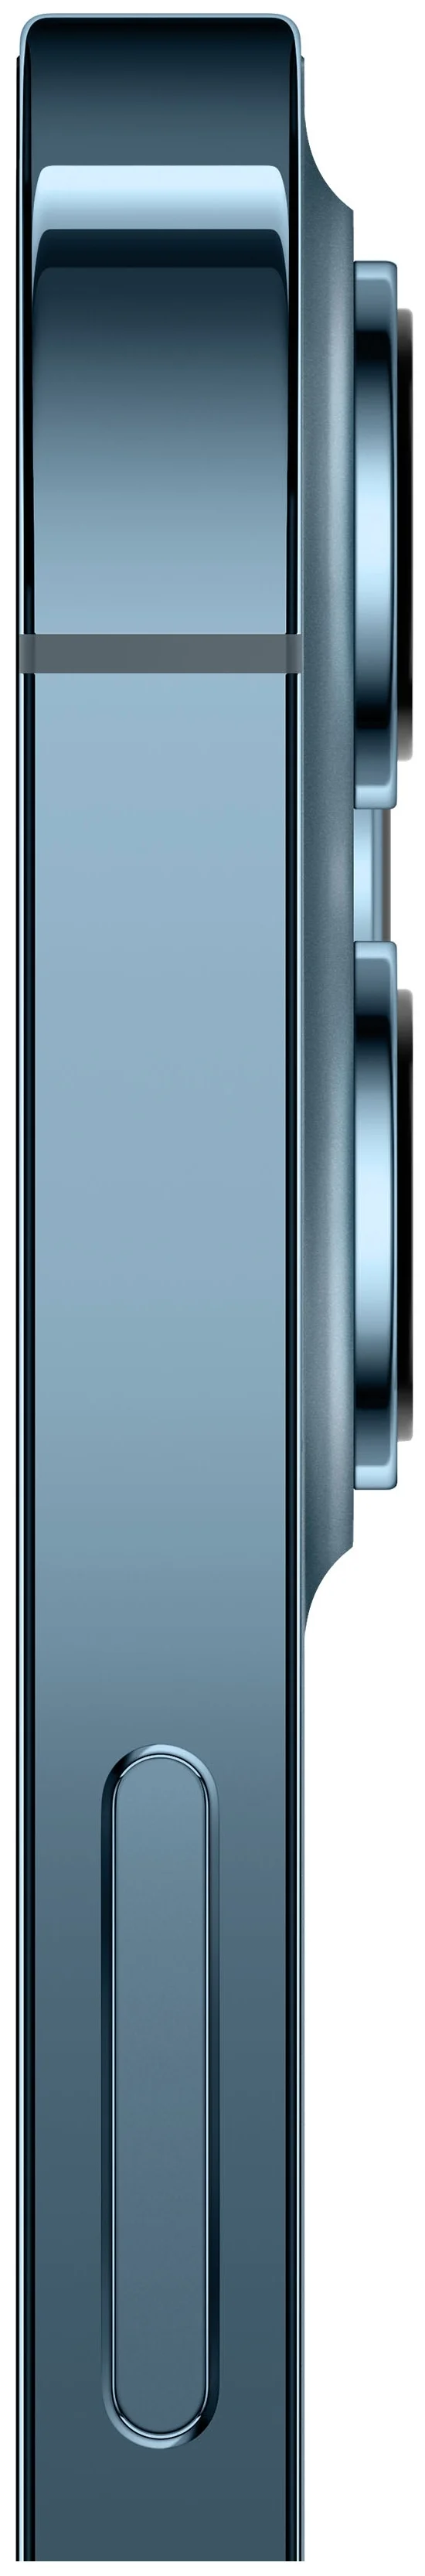 Apple iPhone 12 Pro Max 512GB - аккумулятор: 3867 мА·ч